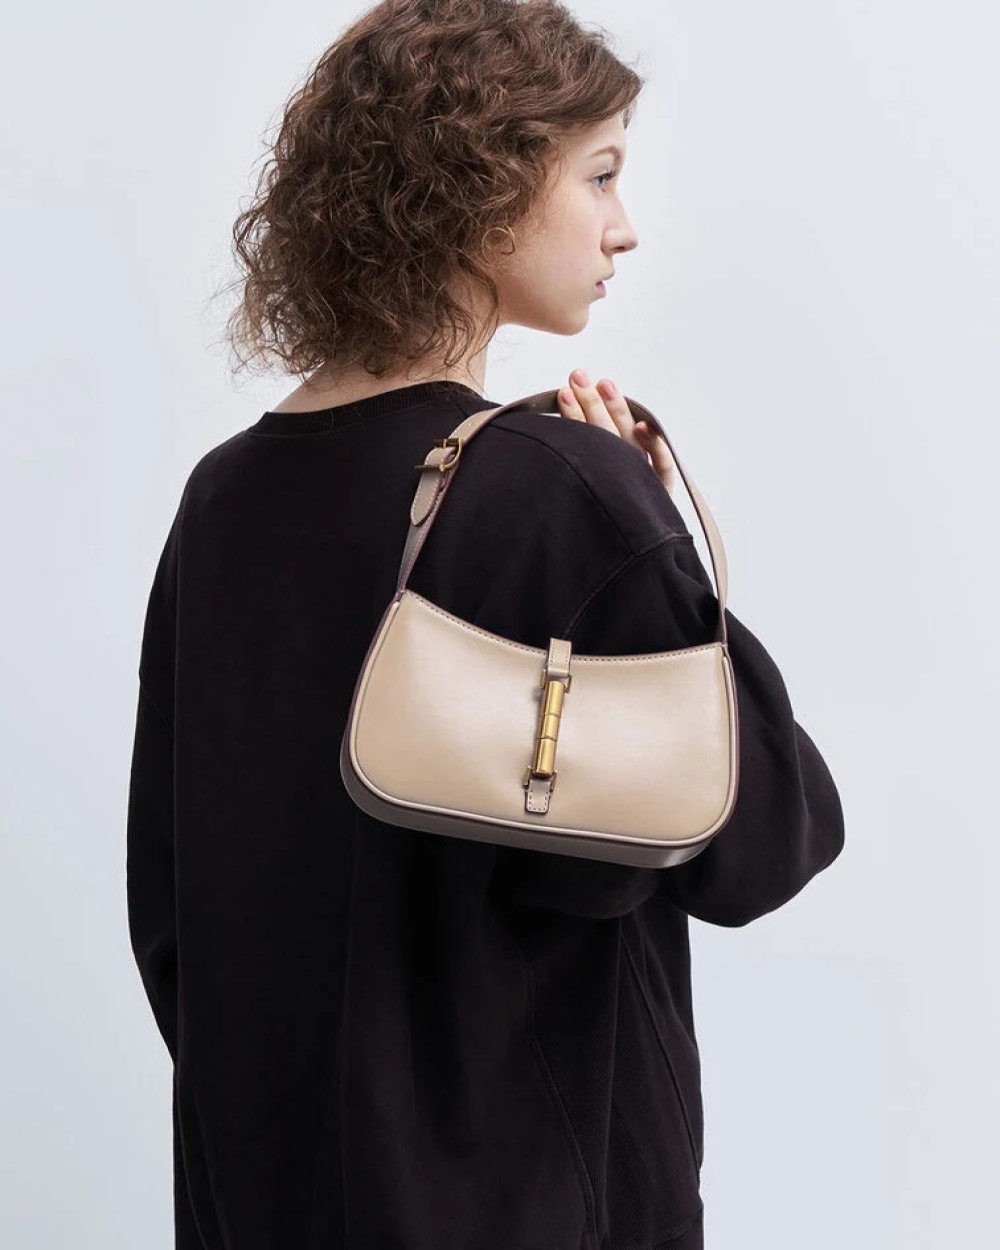 KURGOOL Purses for Women Fashion Handbags Tote Bag Shoulder Bags Top Handle  Satchel Purse for Ladies : Amazon.in: Shoes & Handbags